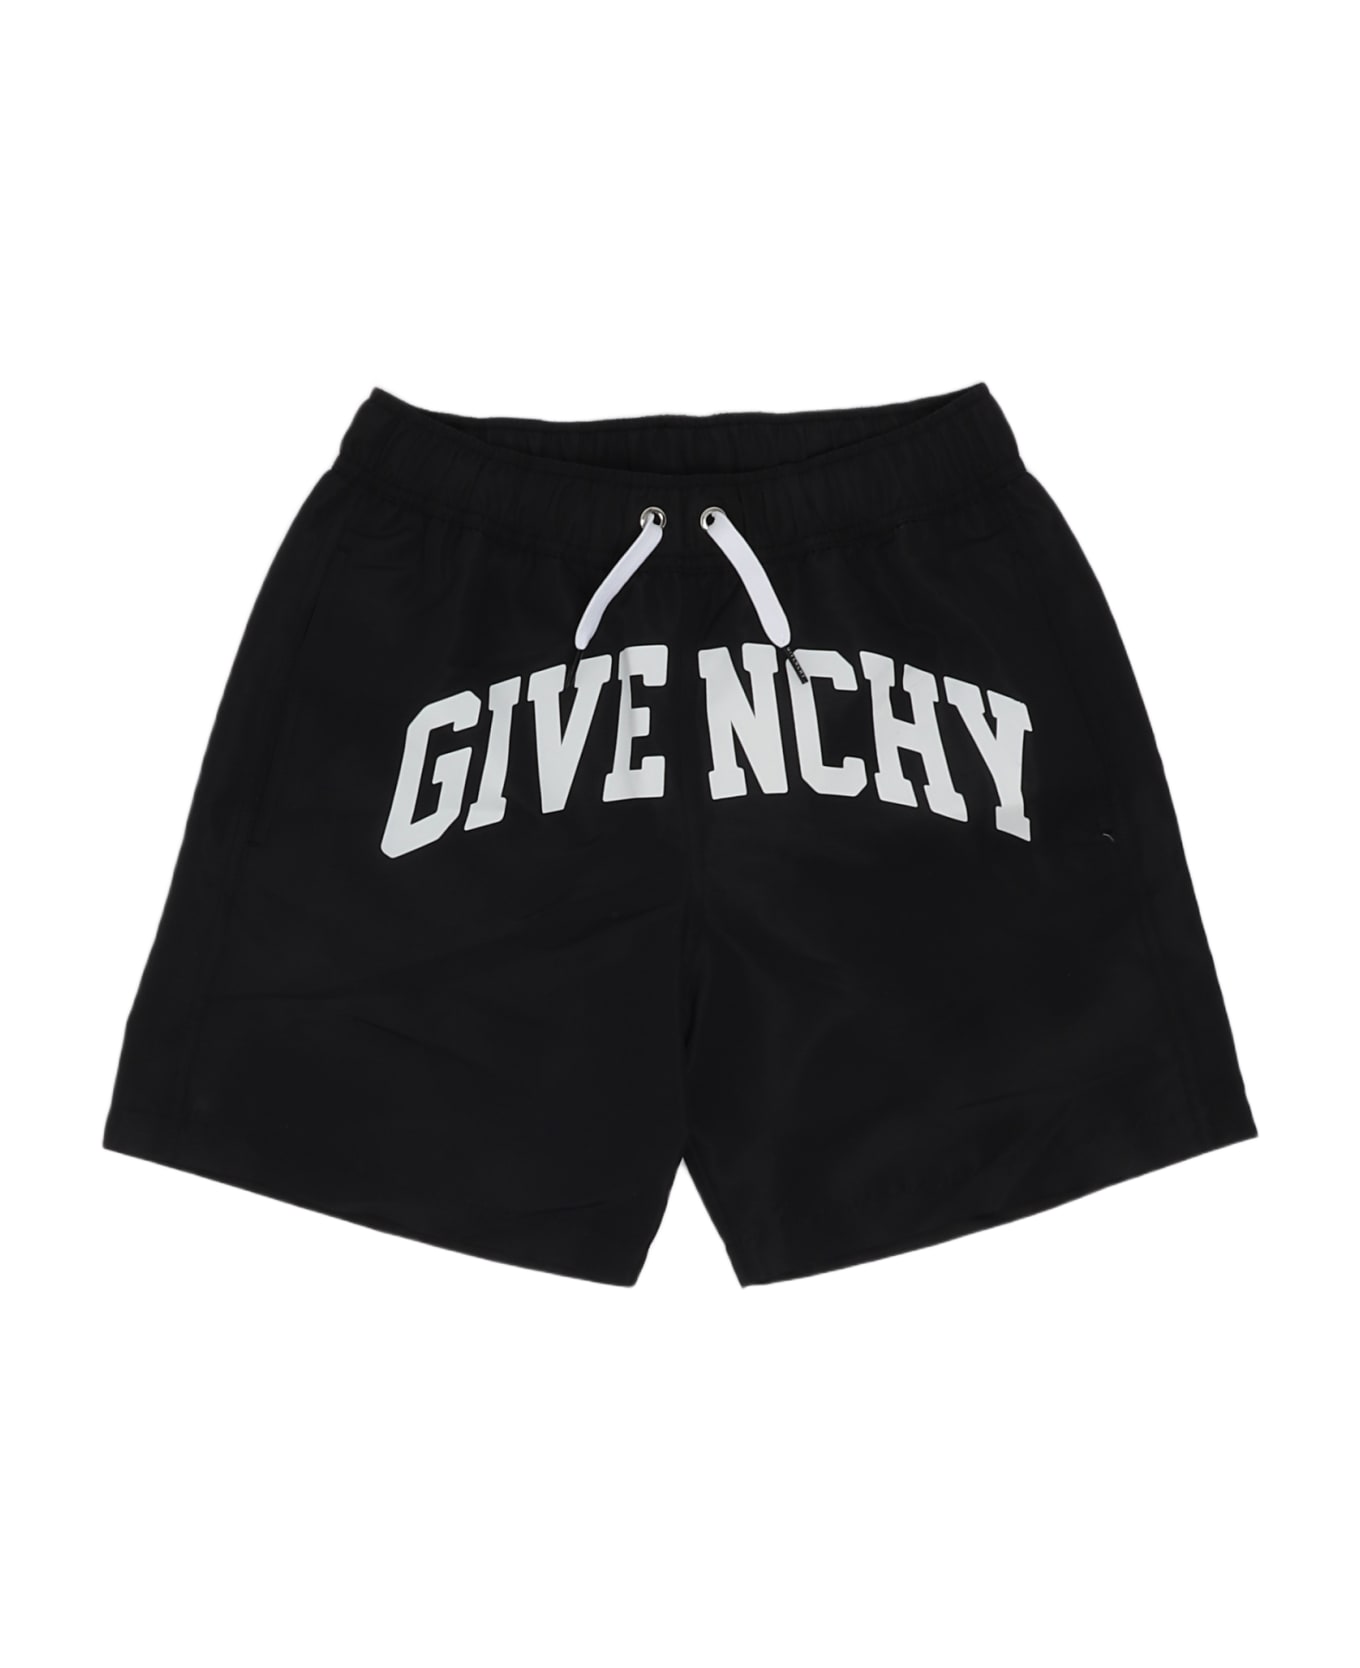 Givenchy Boxer Boxer - NERO アンダーウェア